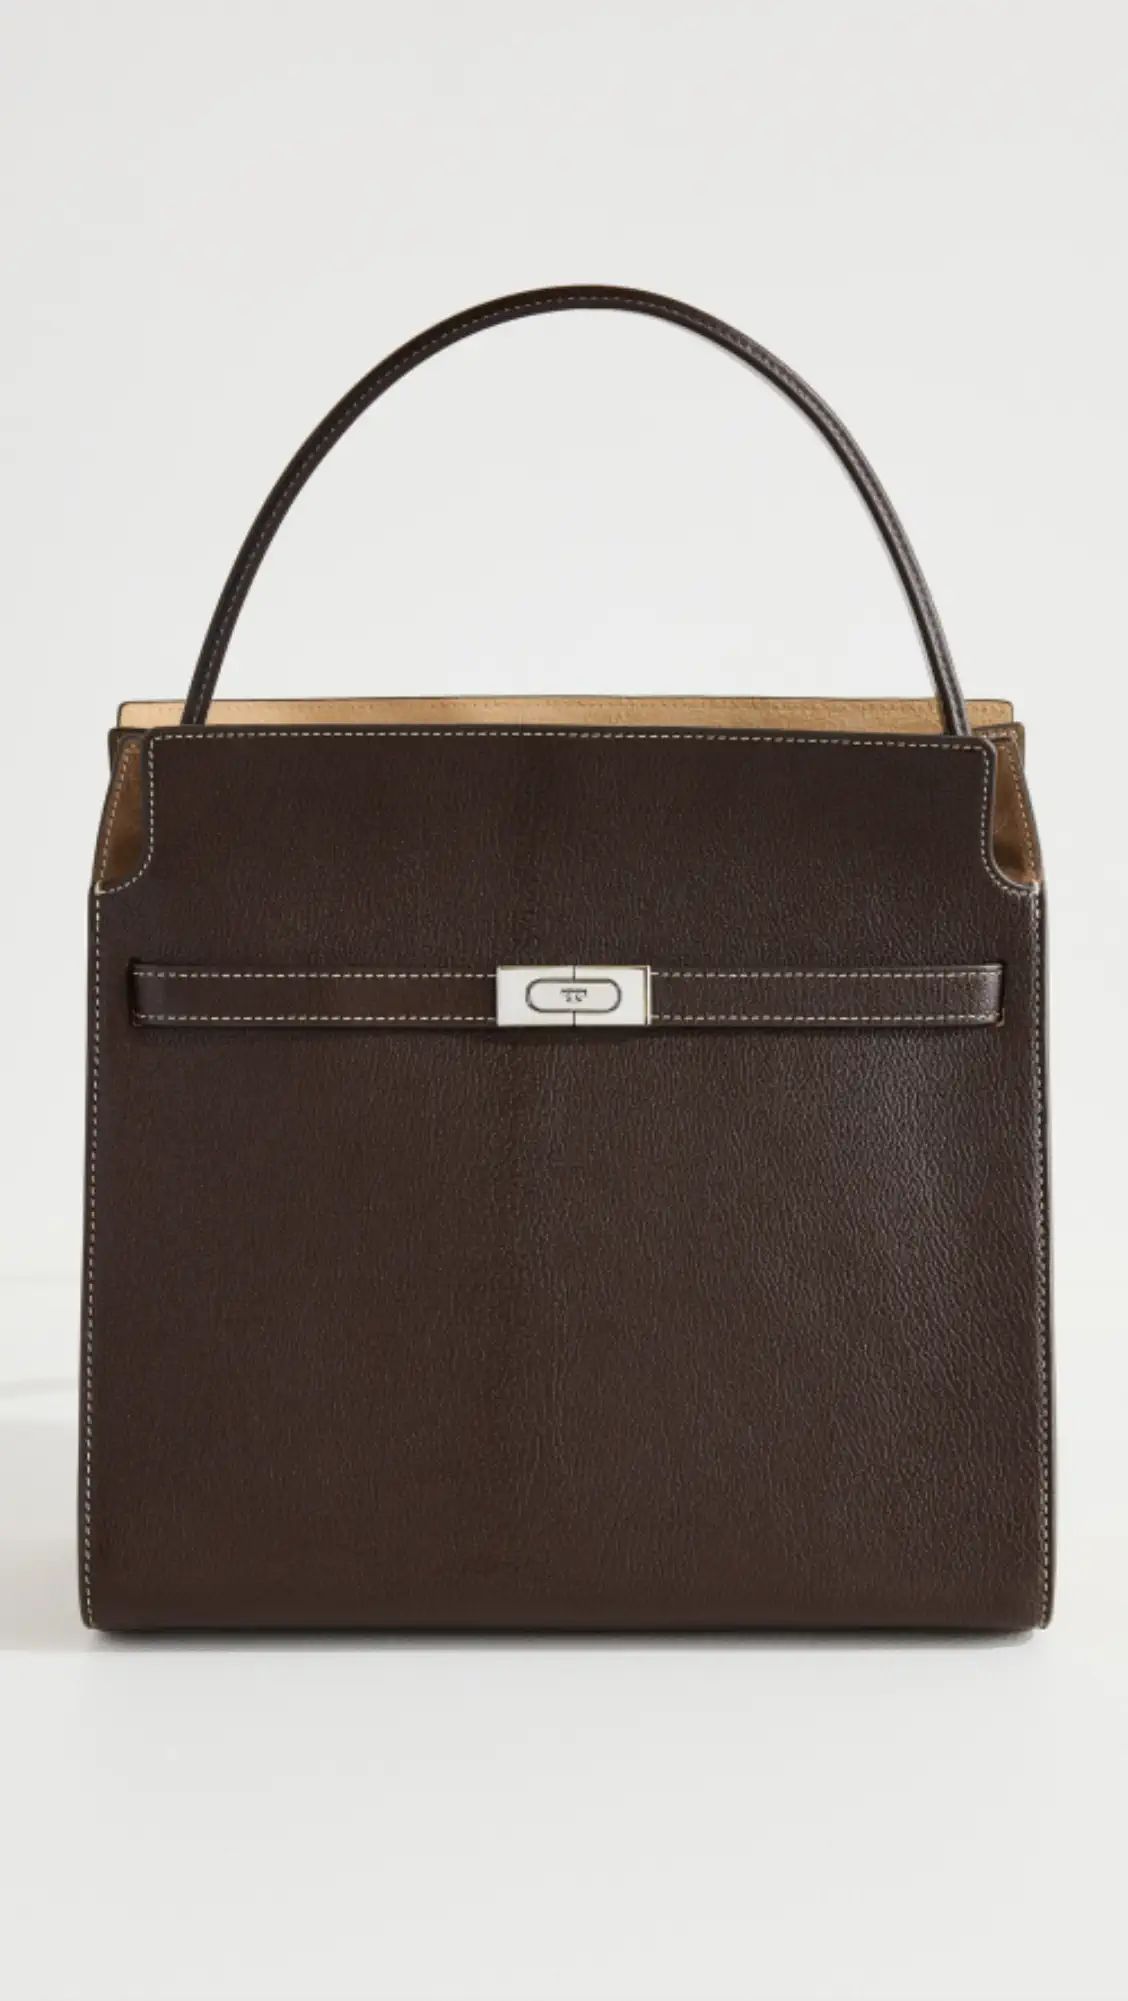 Tory Burch Lee Radziwill Textured Double Bag | Shopbop | Shopbop